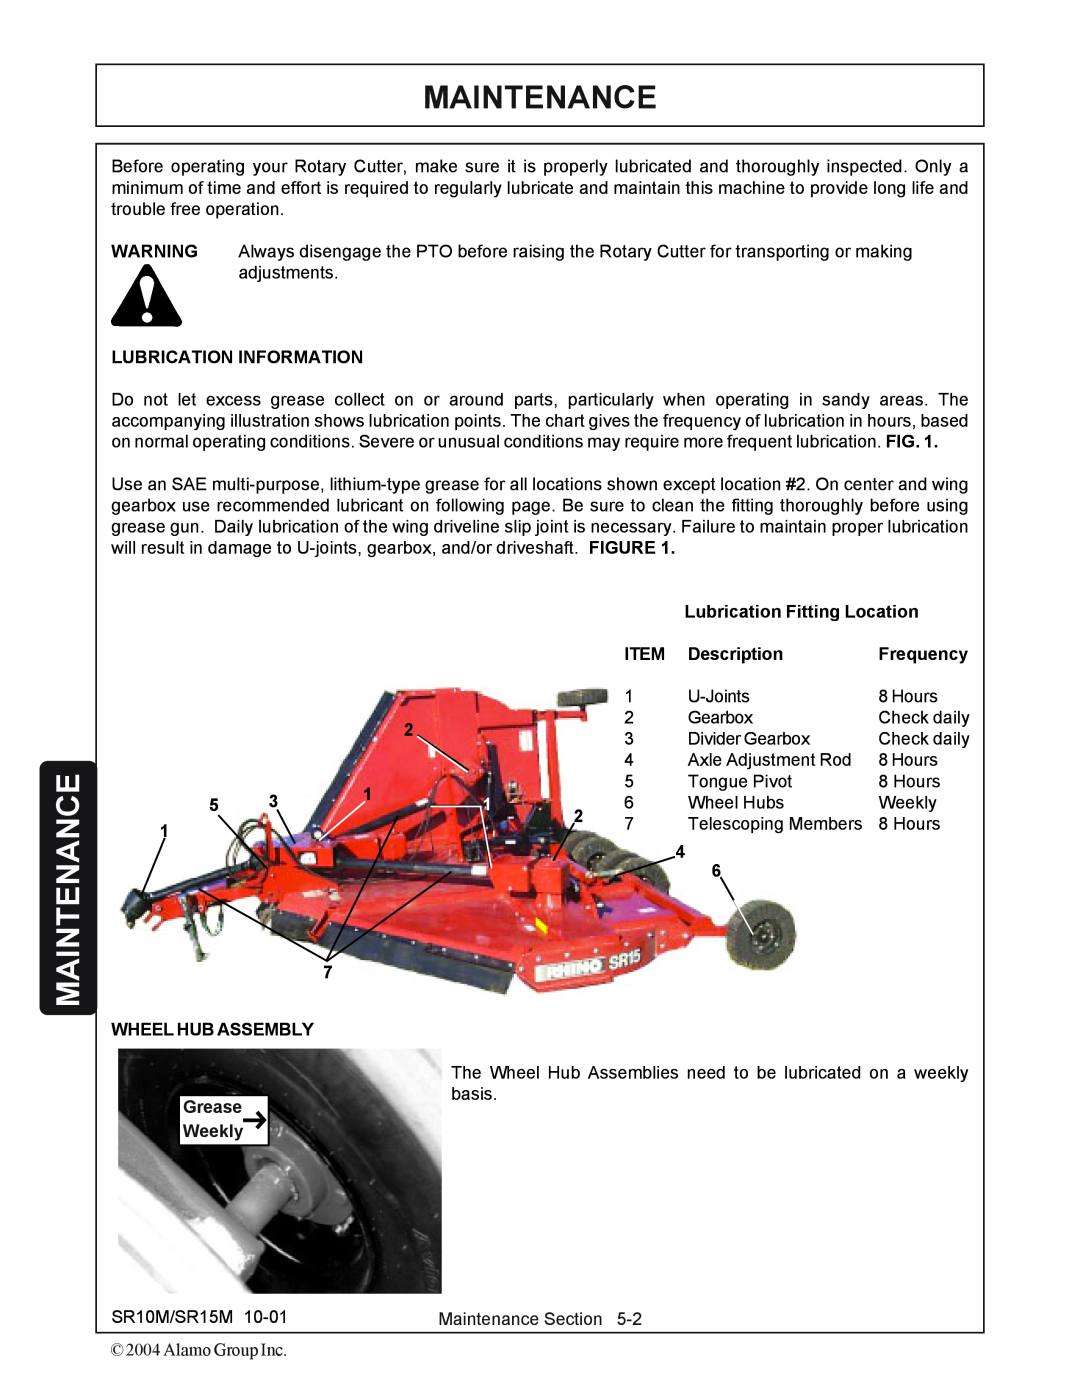 Servis-Rhino SR10M, SR15M manual Maintenance, Lubrication Information, Lubrication Fitting Location, Description, Frequency 